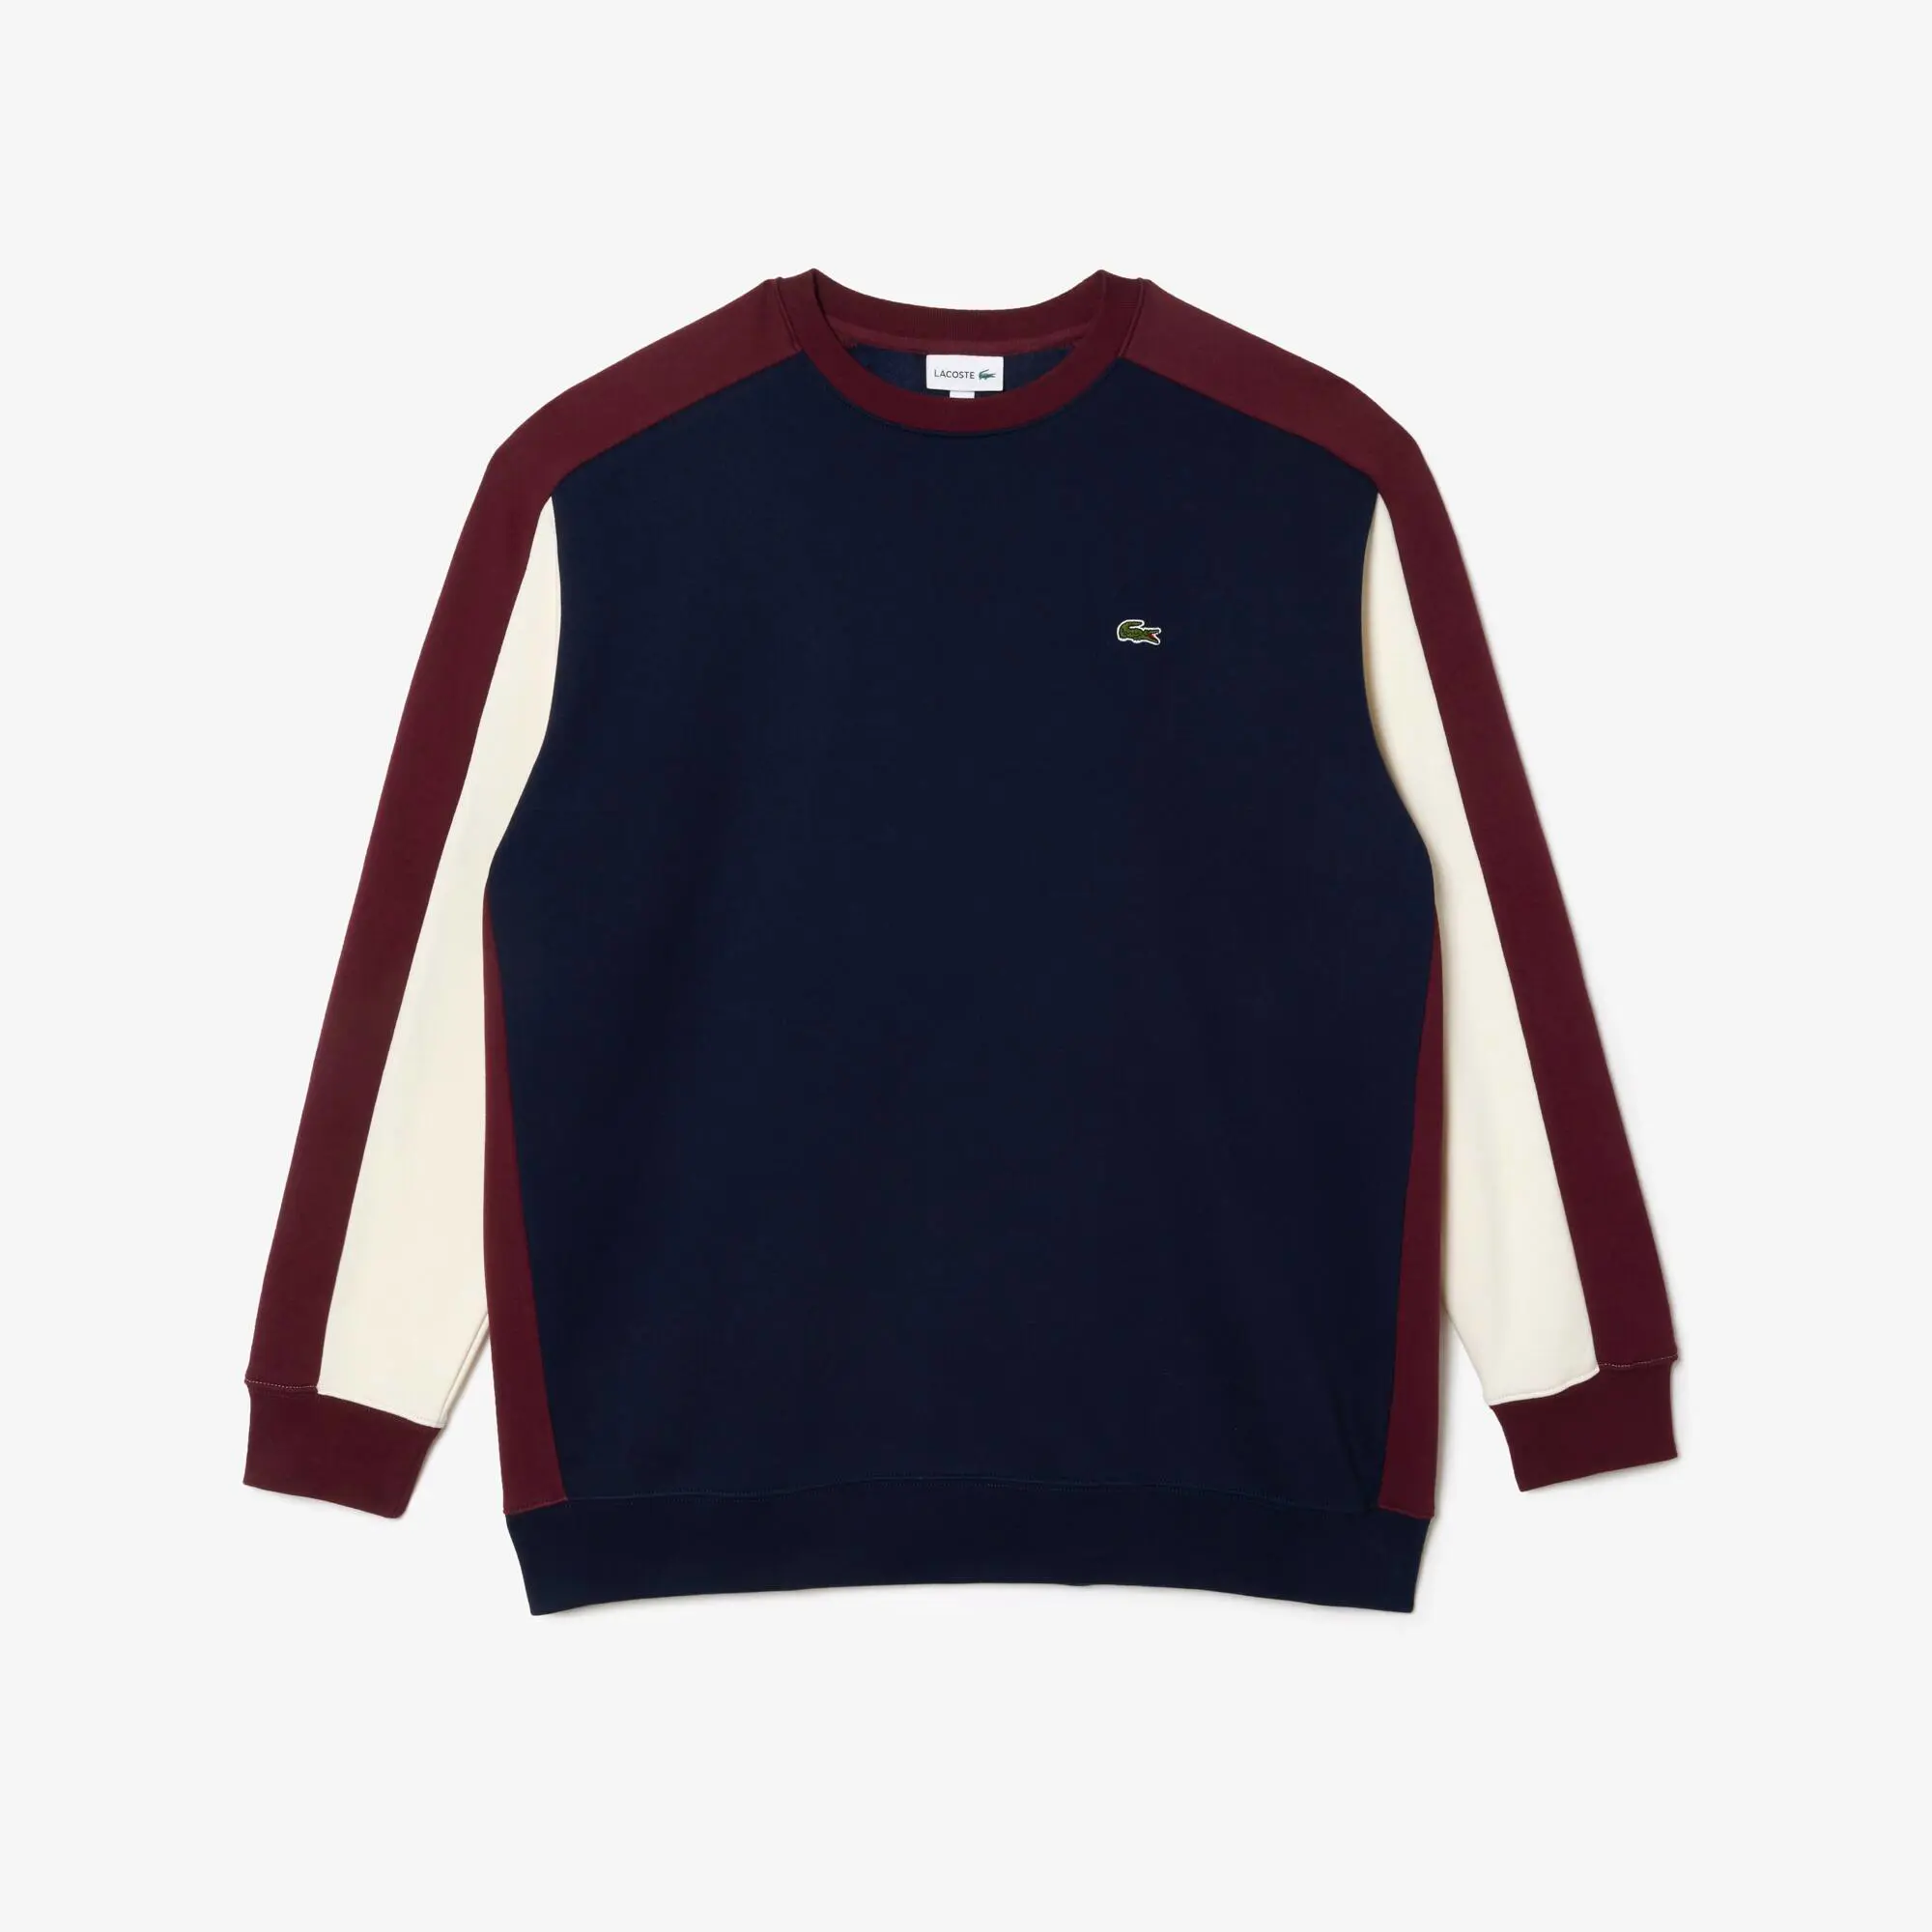 Lacoste Colourblock Sweatshirt - Plus Size - Big. 1